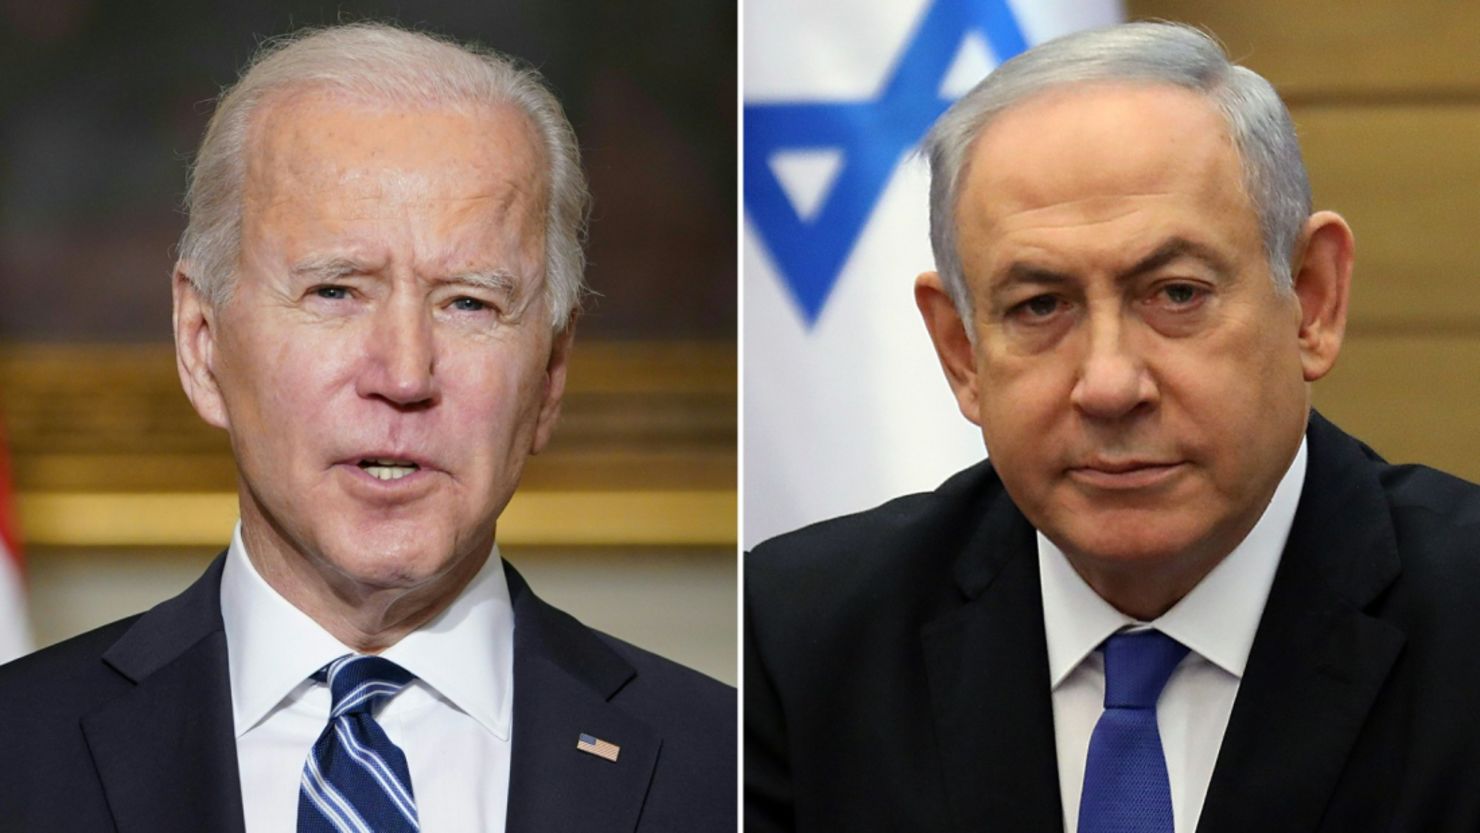 At left, US President Joe Biden, and, at right, Israeli Prime Minister Benjamin Netanyahu, are pictured. 